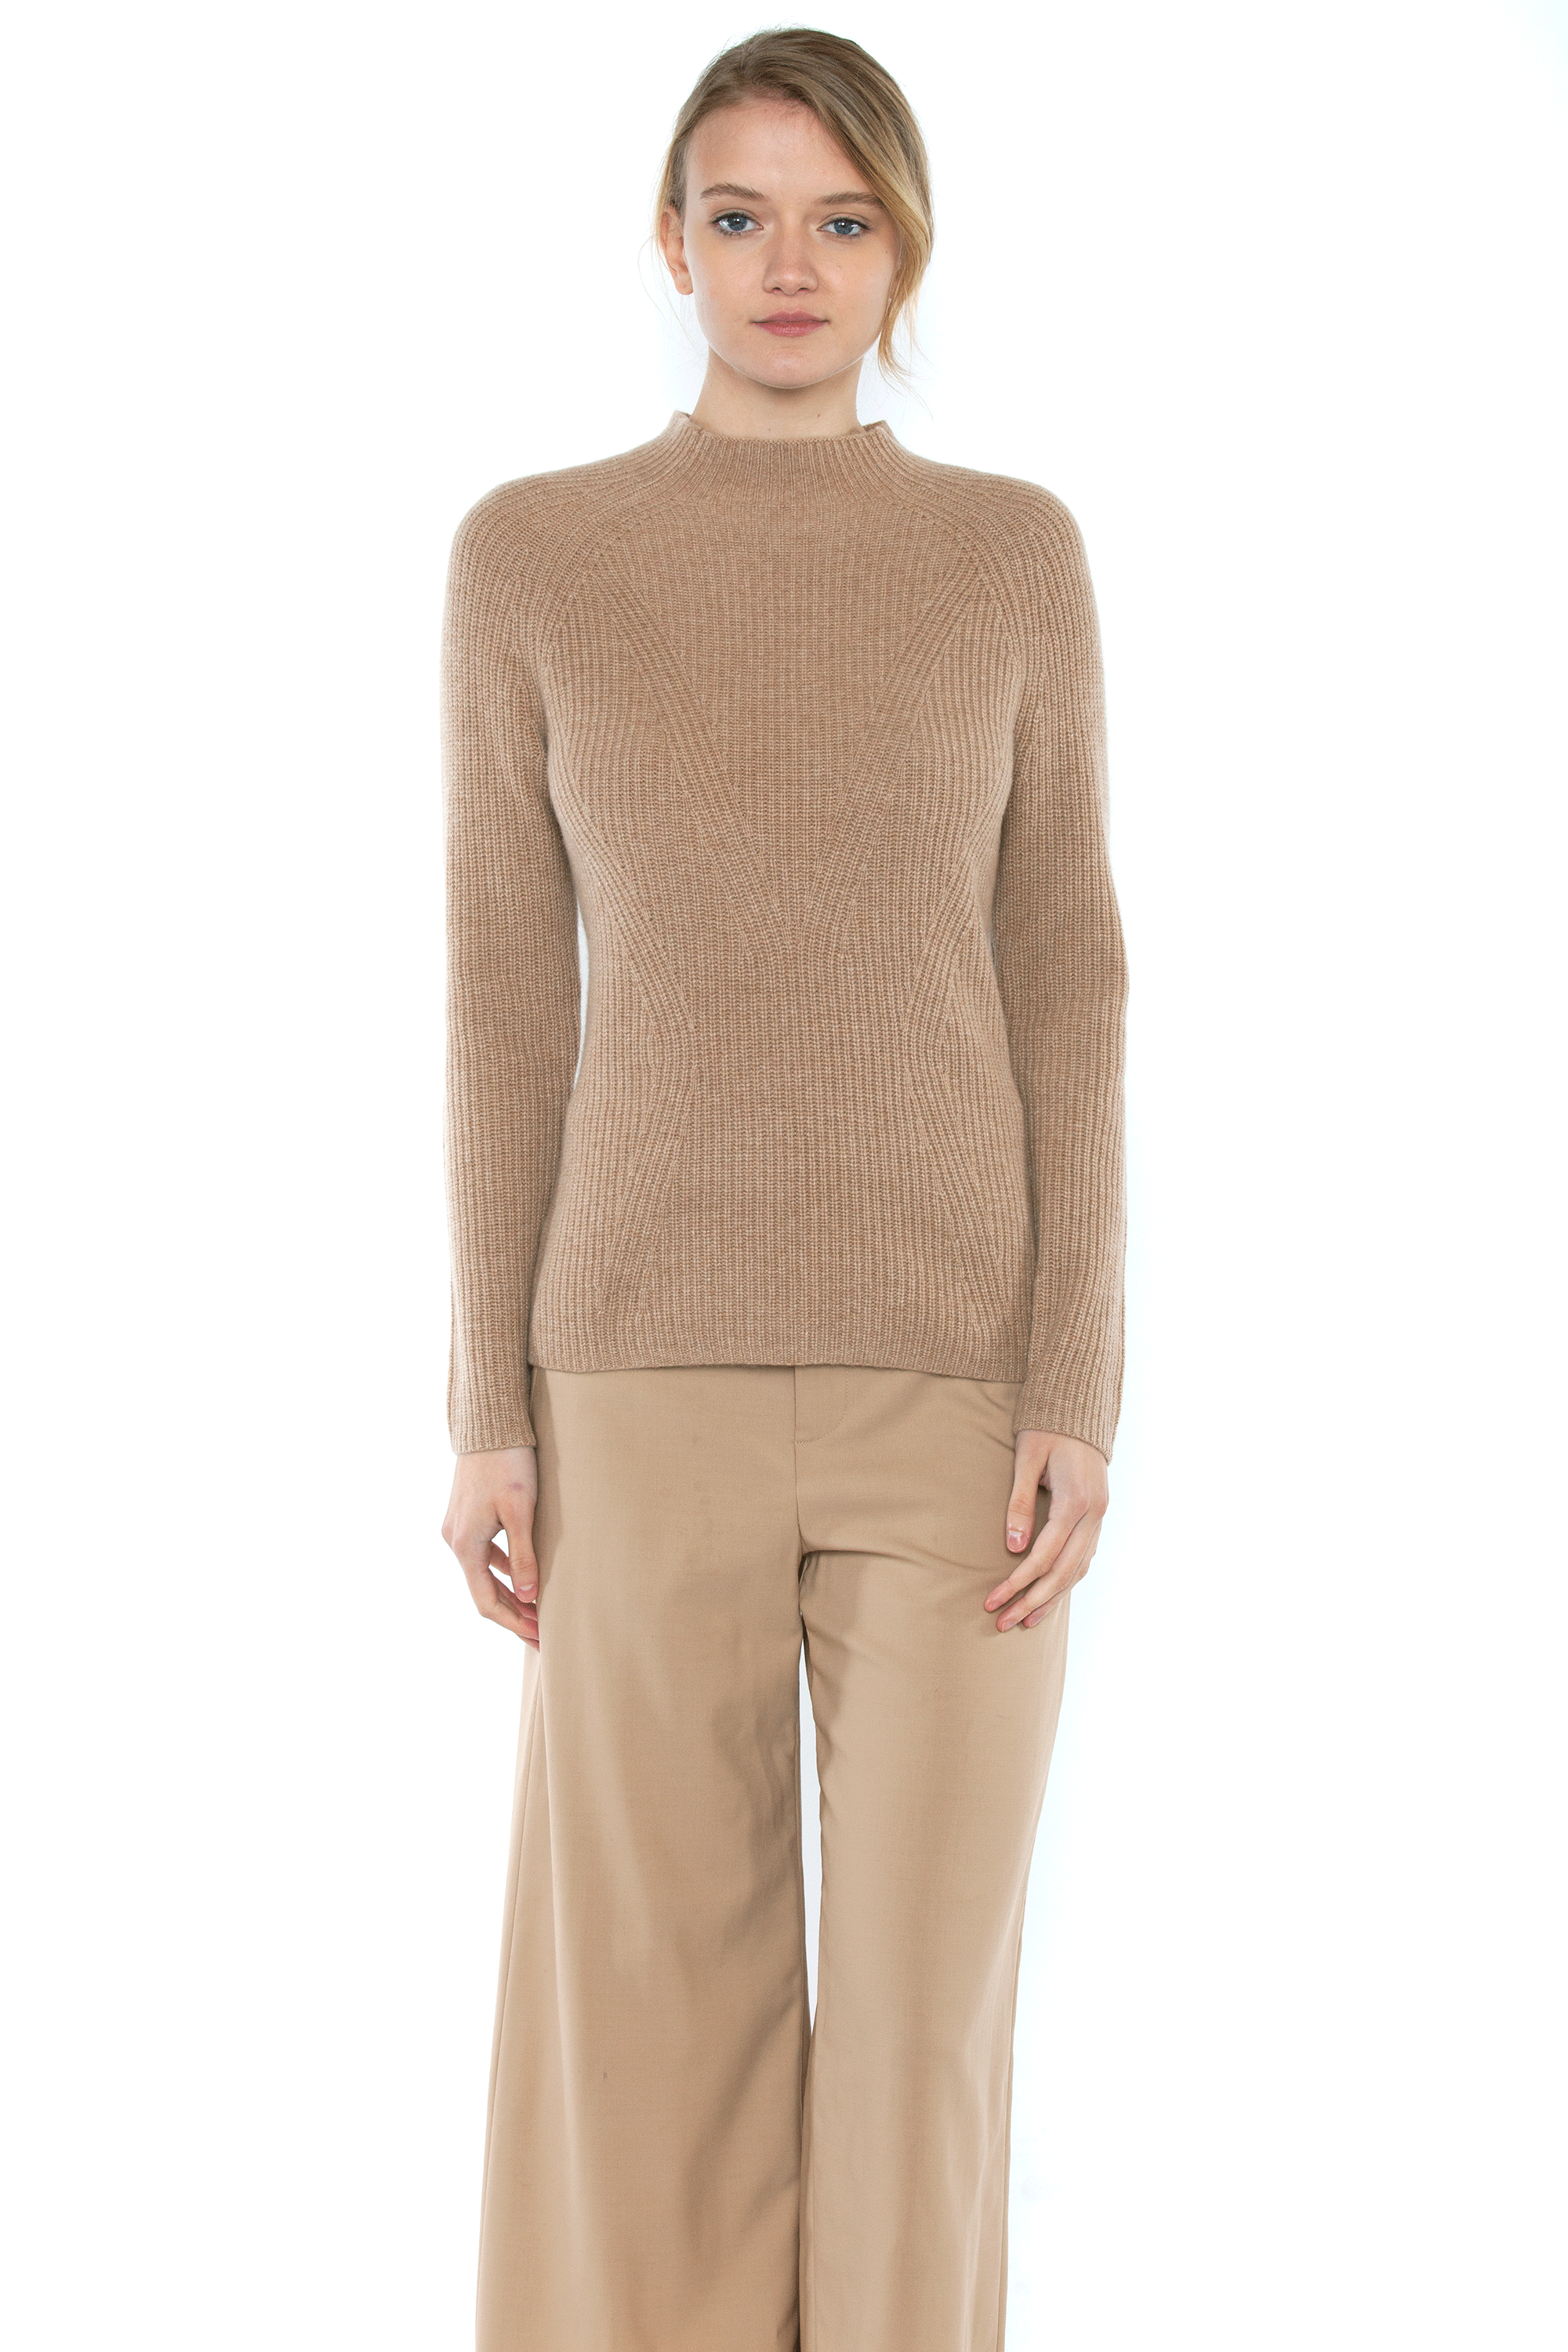 JENNIE LIU Women's 100% Pure Cashmere Long Sleeve Chuncky Rib Funnel Neck  Sweater - J CASHMERE